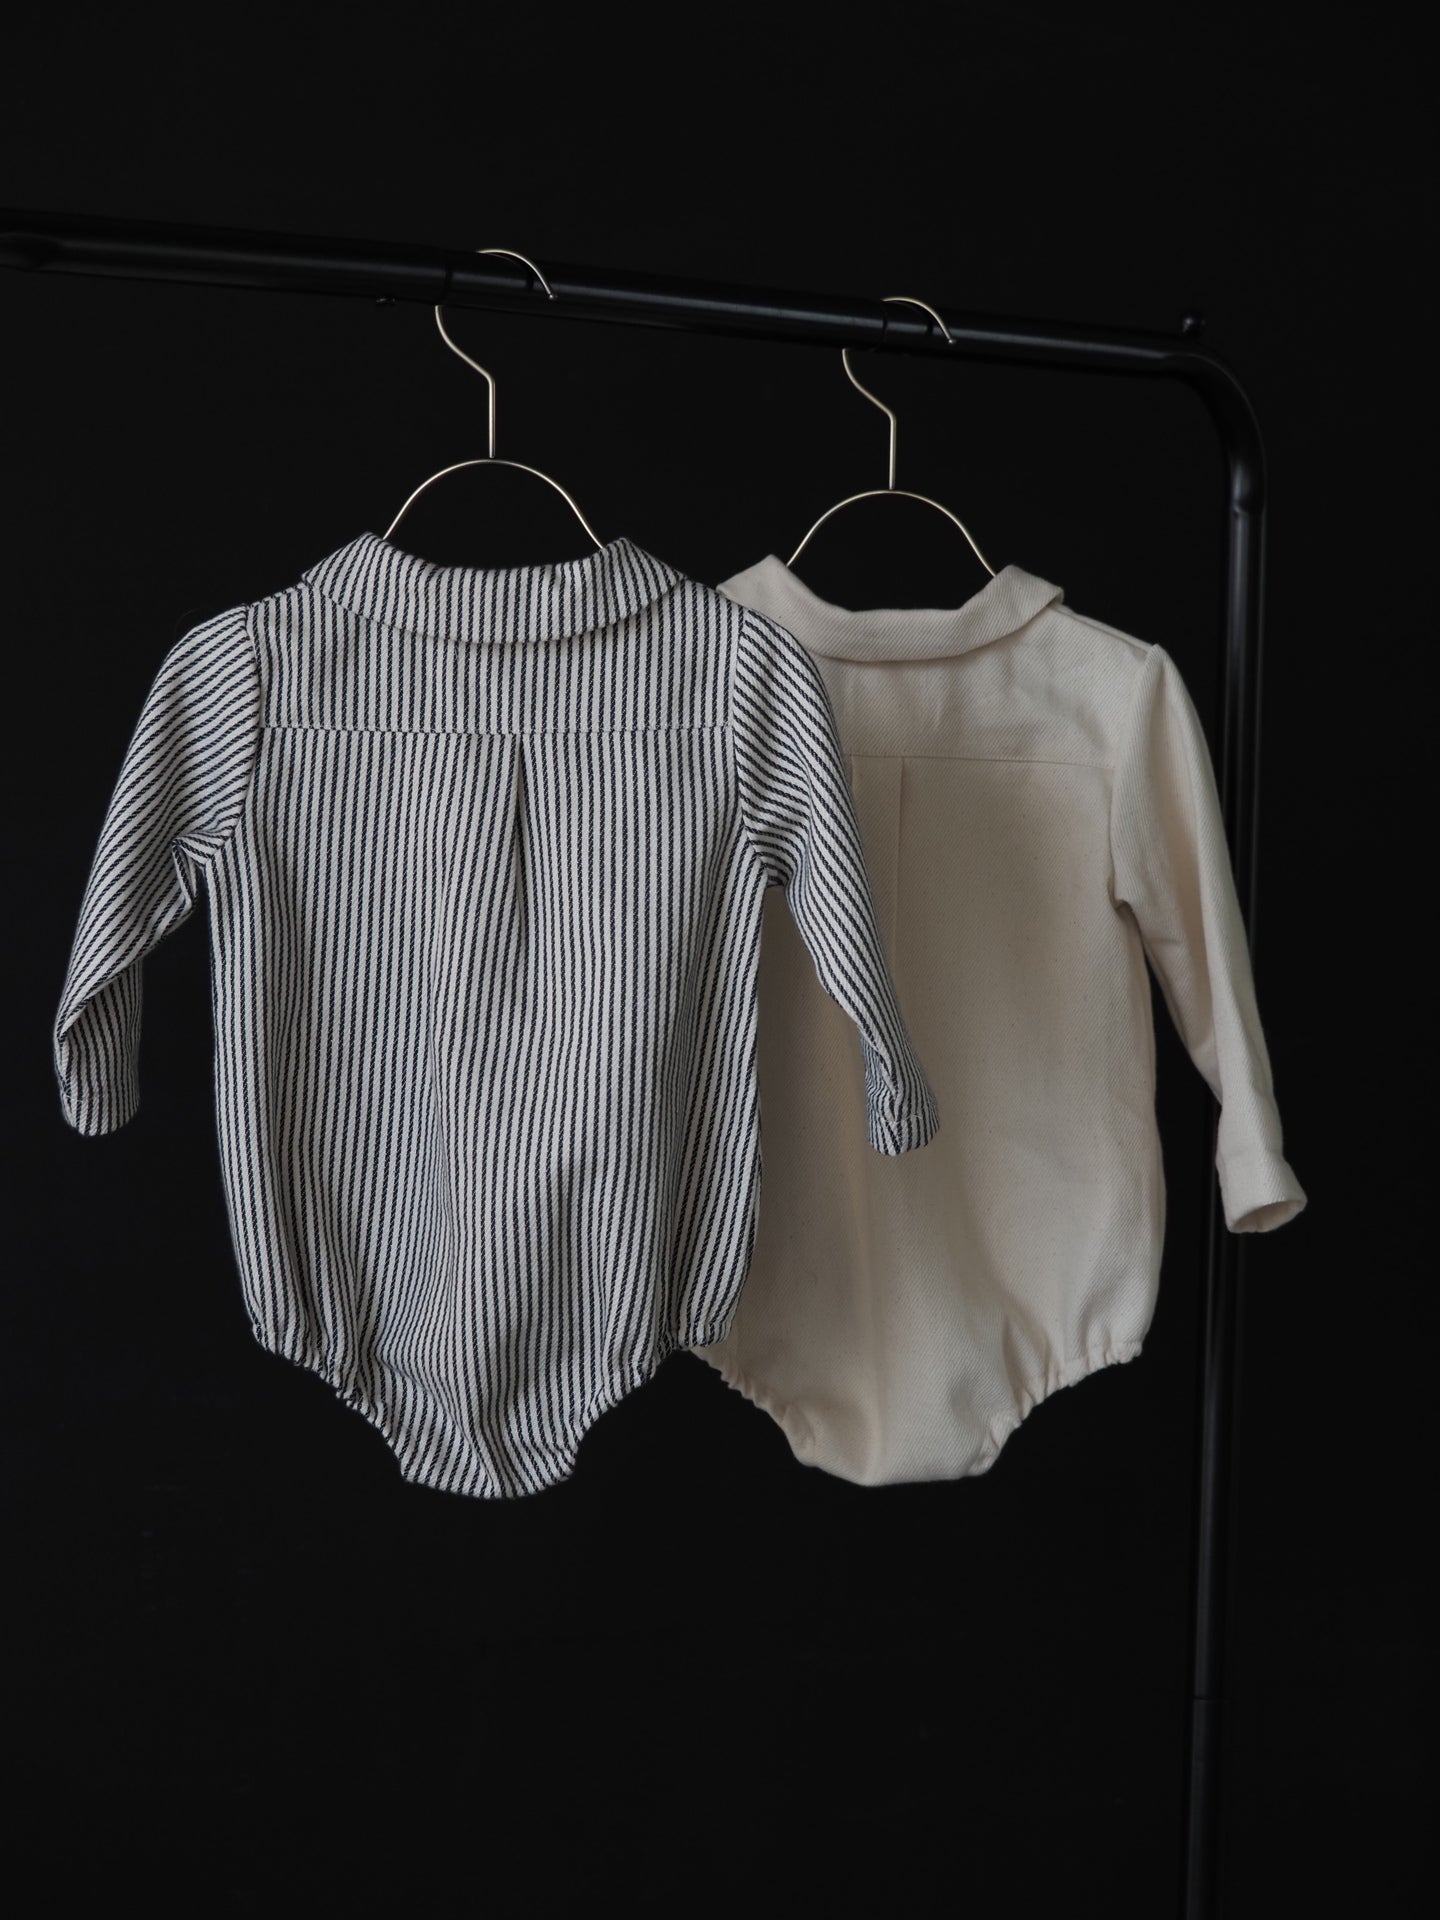 【KOHANA MADE04】organic denim shirt rompers/white -made in Japan-